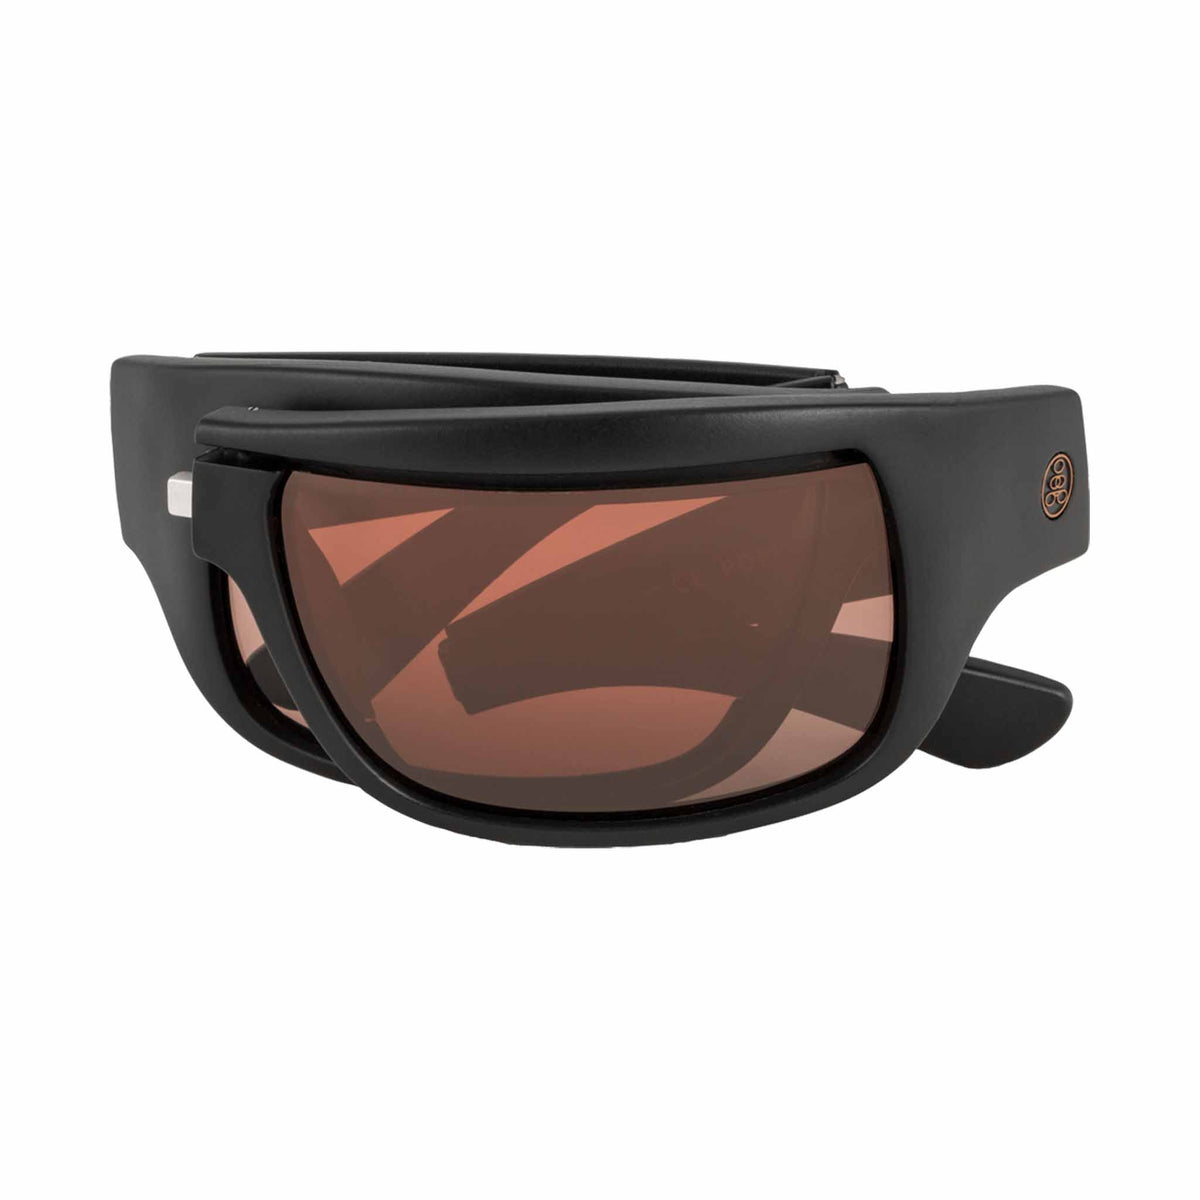 Popticals, Premium Compact Sunglasses, PopH2O, 010070-BMCP, Polarized Sunglasses, Matte Black Frame, Copper Lenses, Compact View